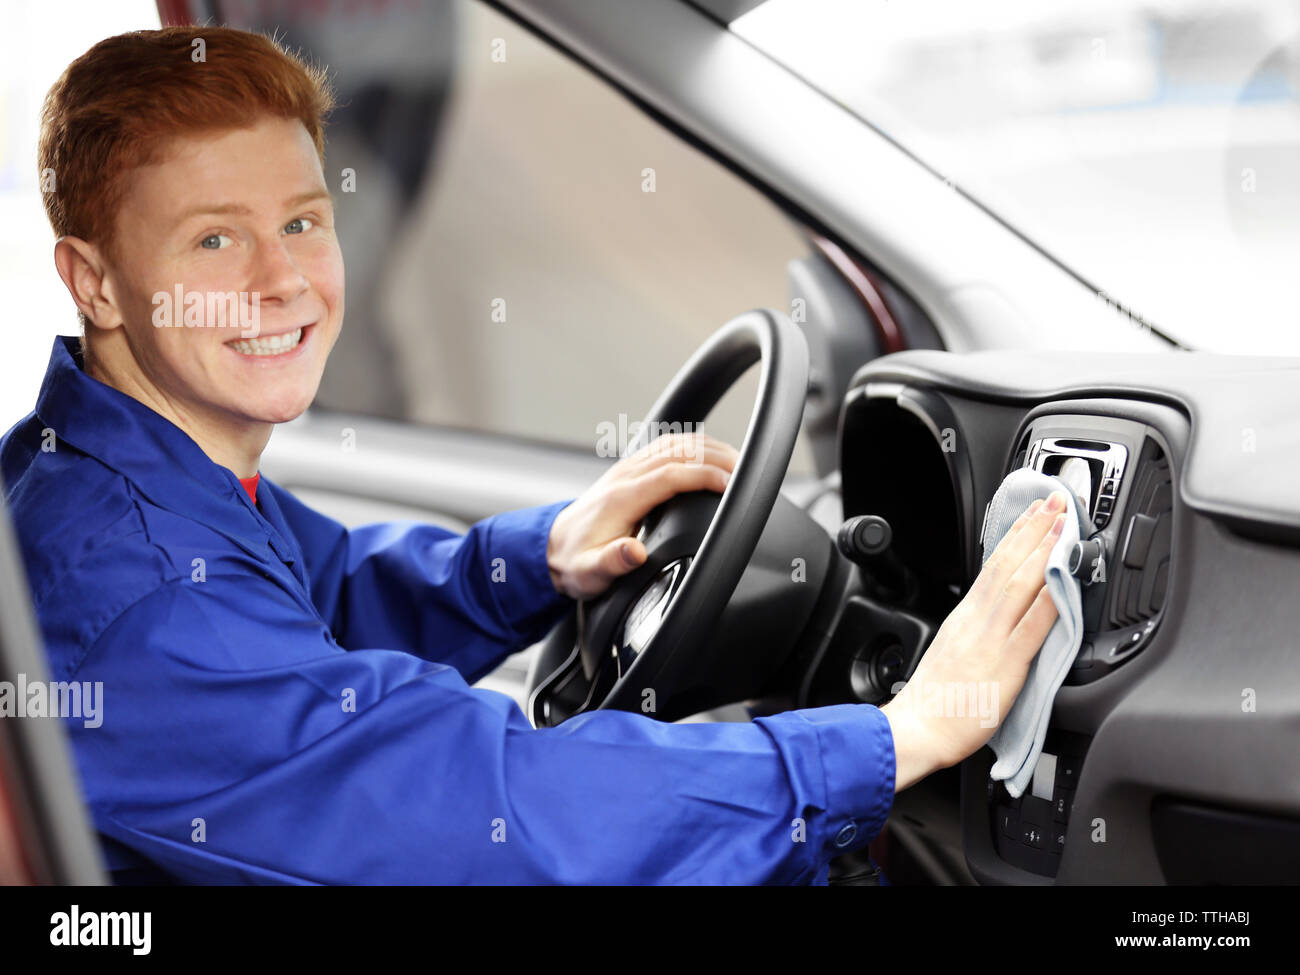 Young man polishing vehicle interior Stock Photo